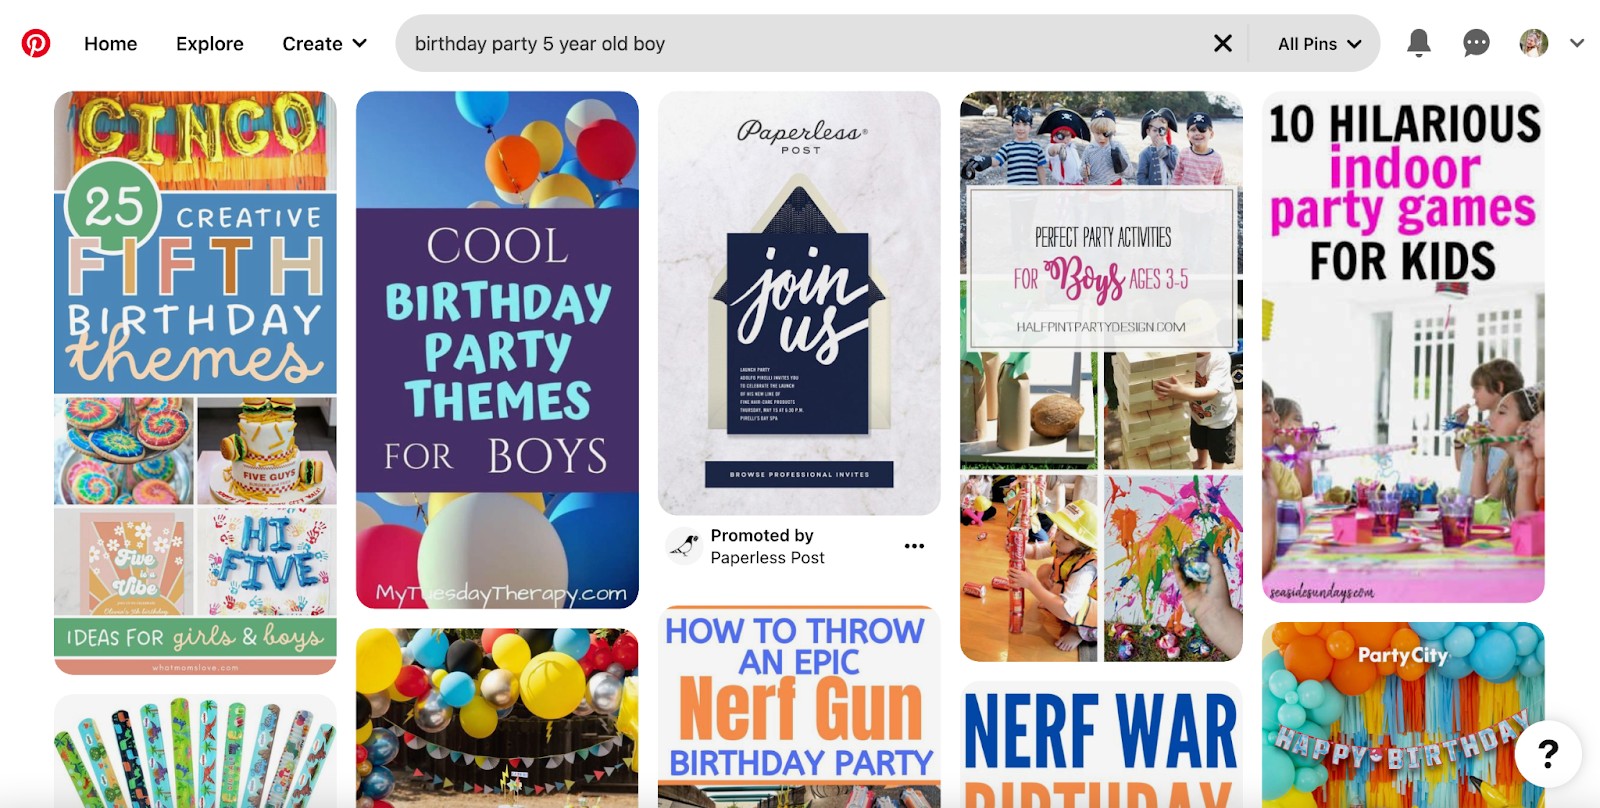 birthday party ideas on Pinterest, long-tail keywords, SEO